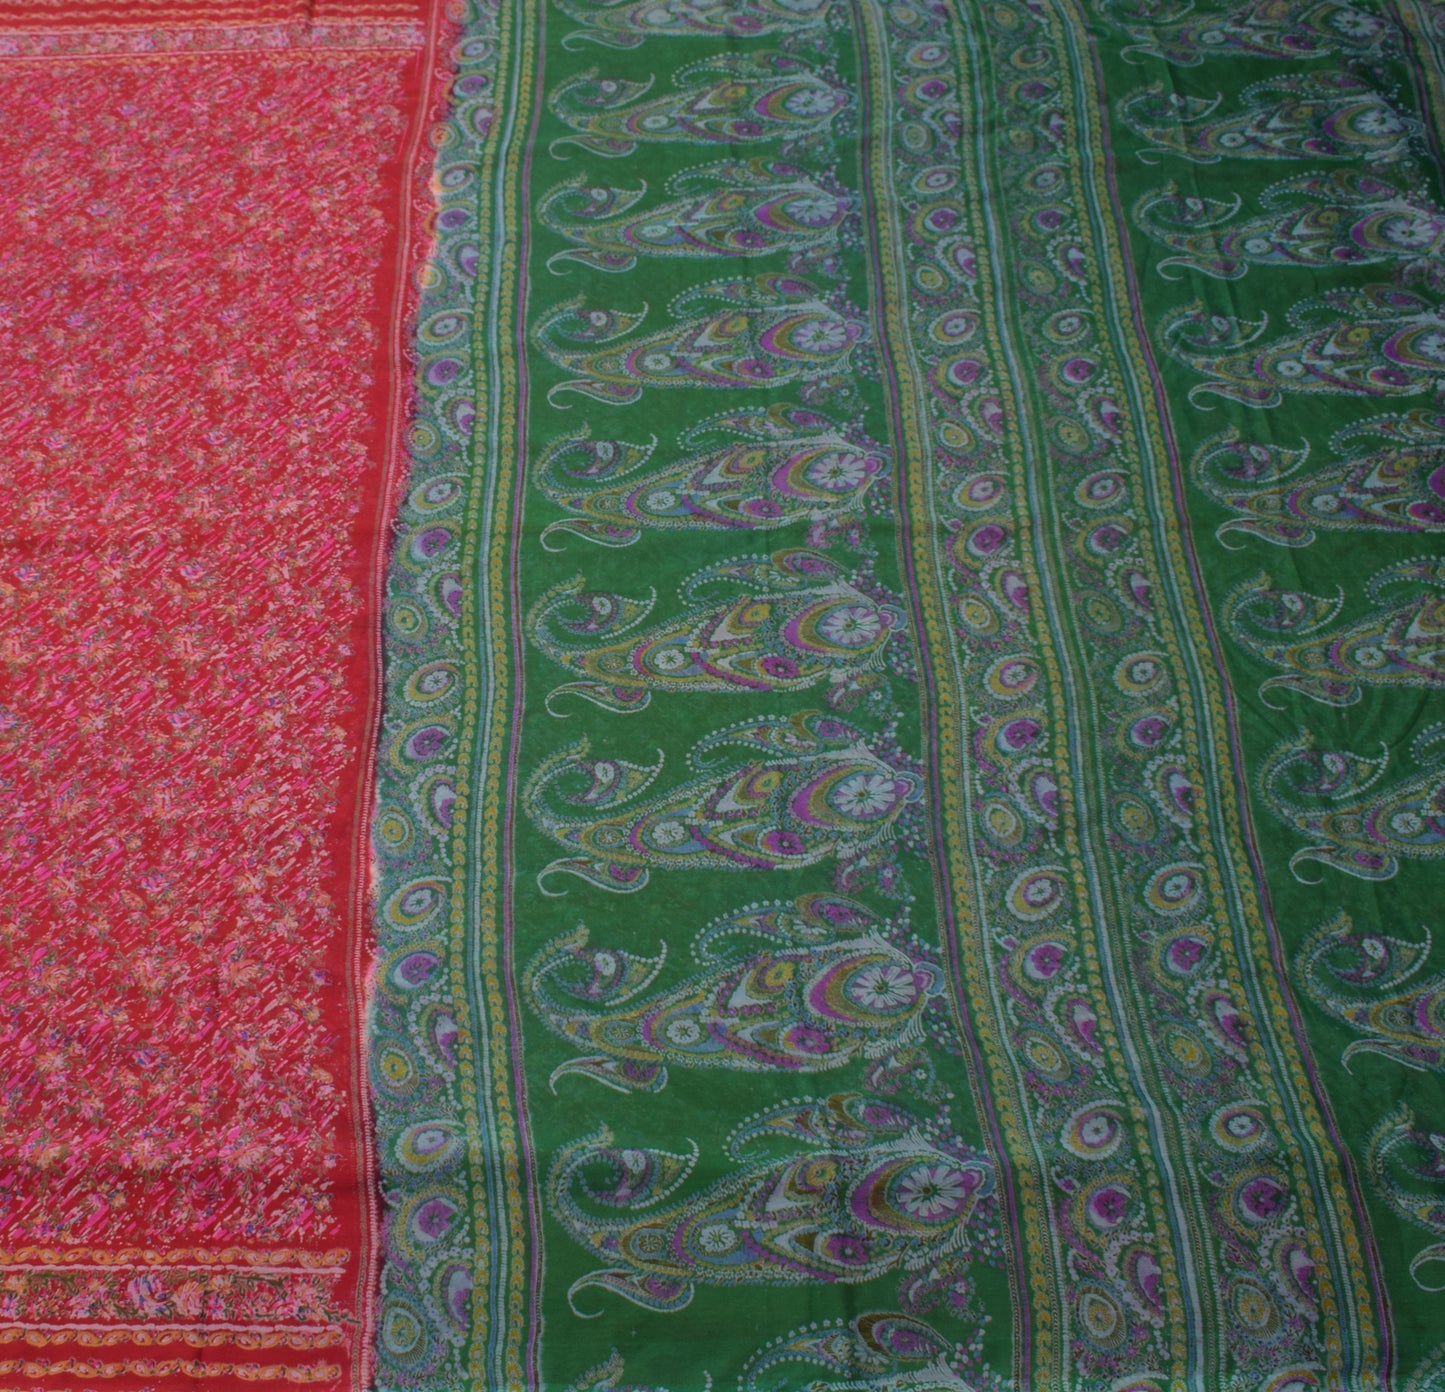 Sushila Vintage Maroon Indian Saree Blend Crepe Silk Printed Floral Soft Fabric